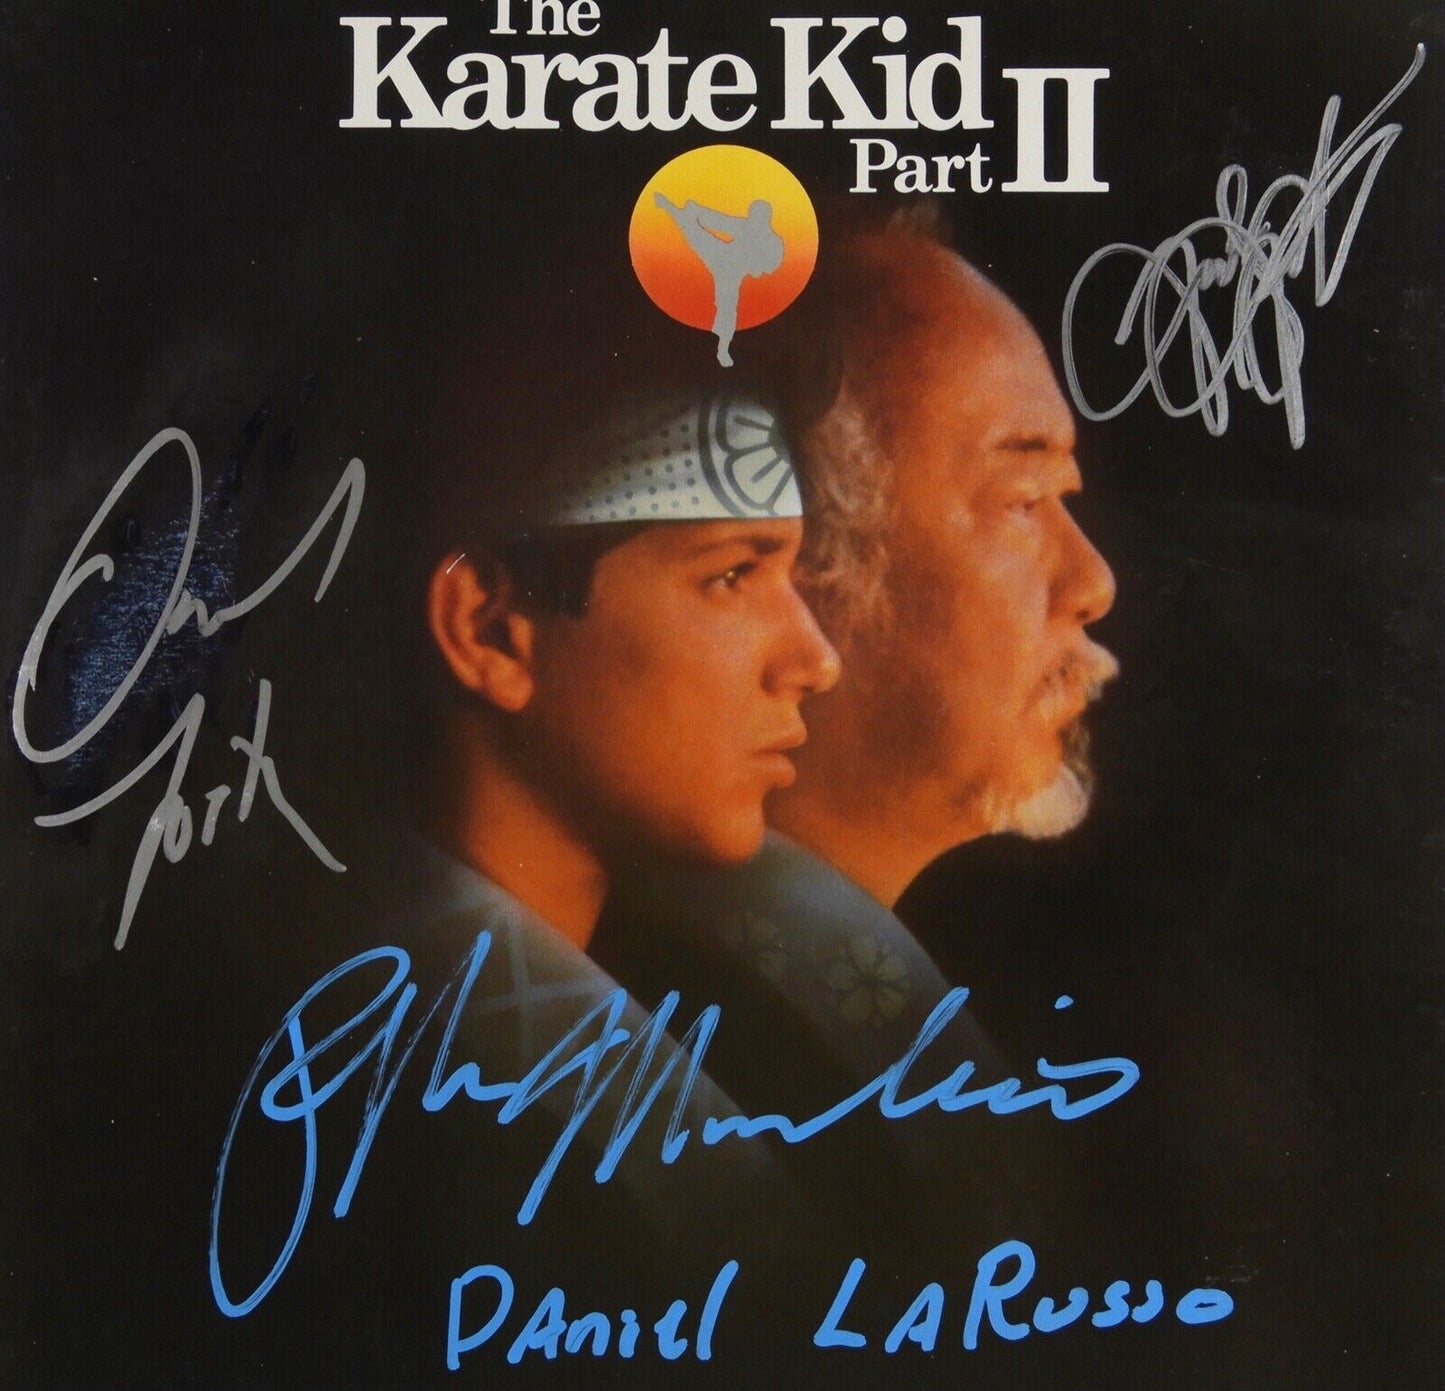 The Karate Kid Part II Signed Autograph JSA Album Soundtrack